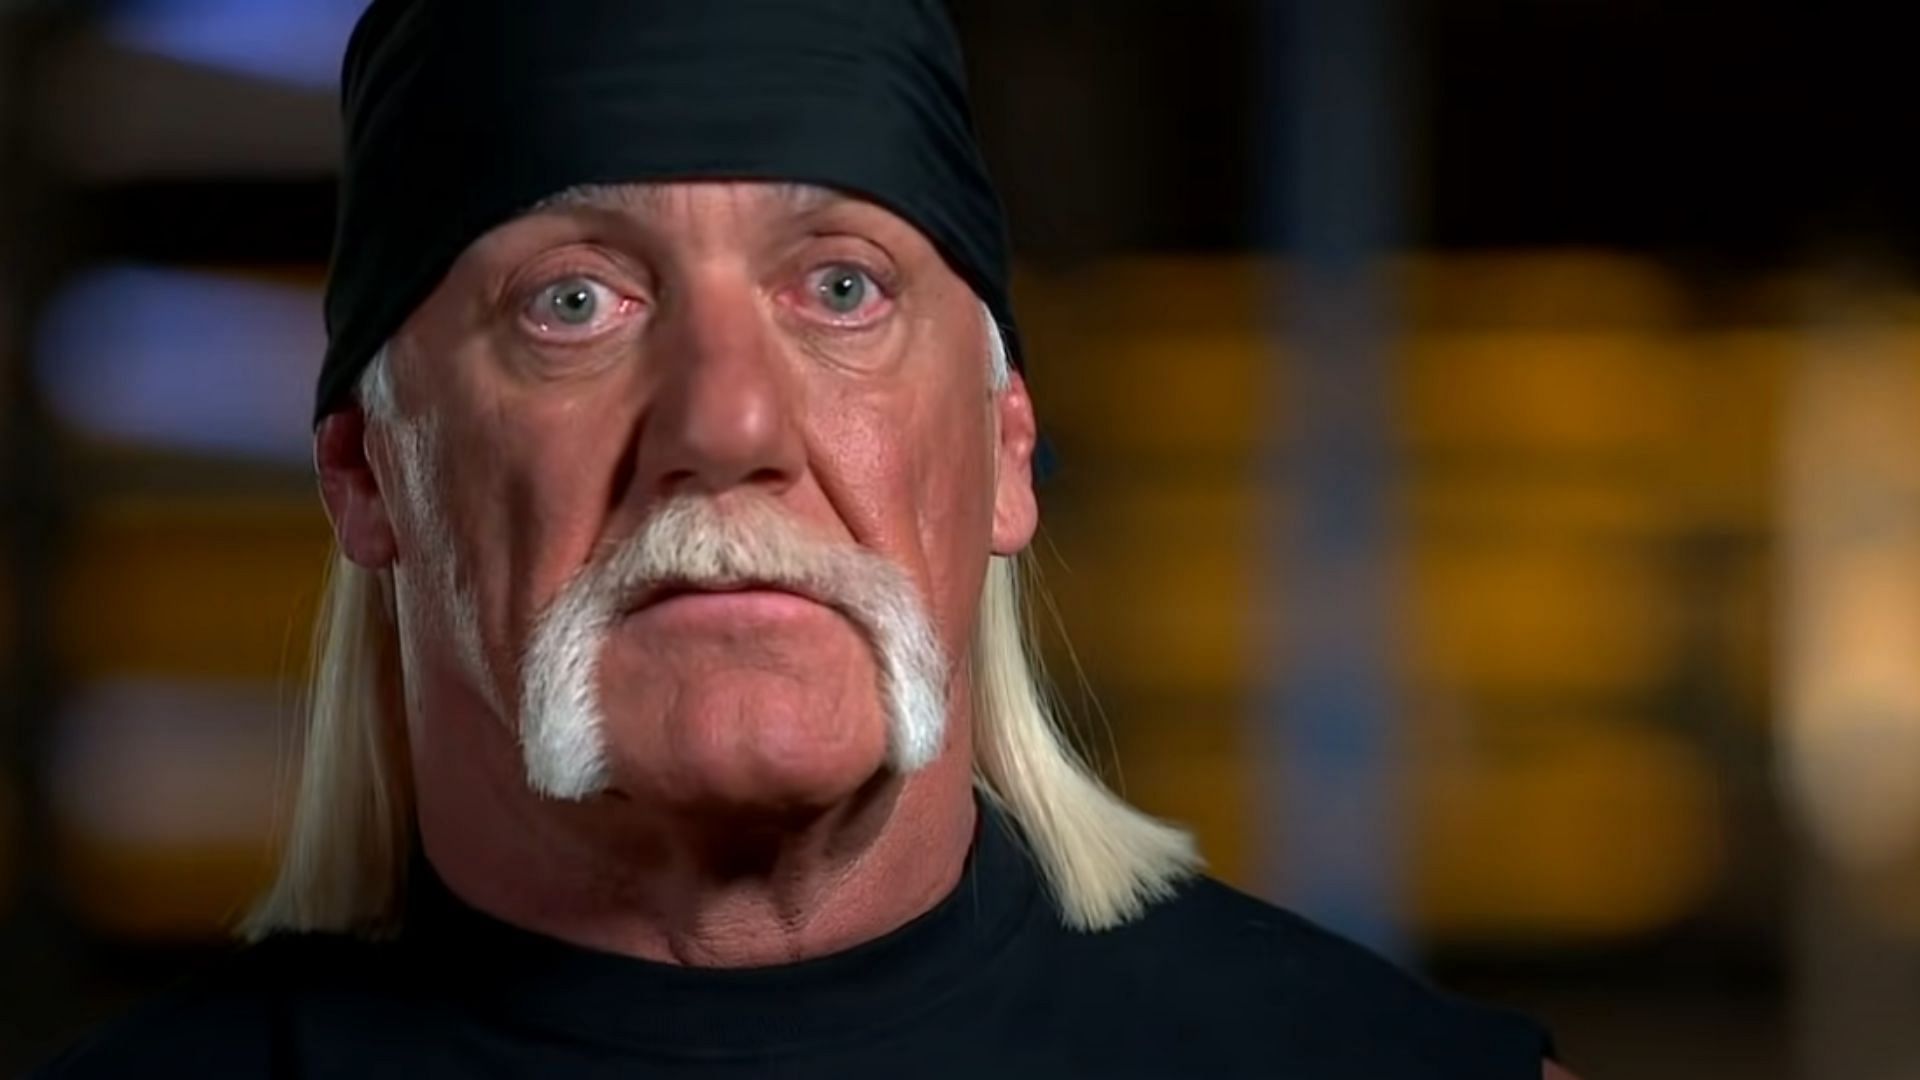 Two-time WWE Hall of Famer Hulk Hogan